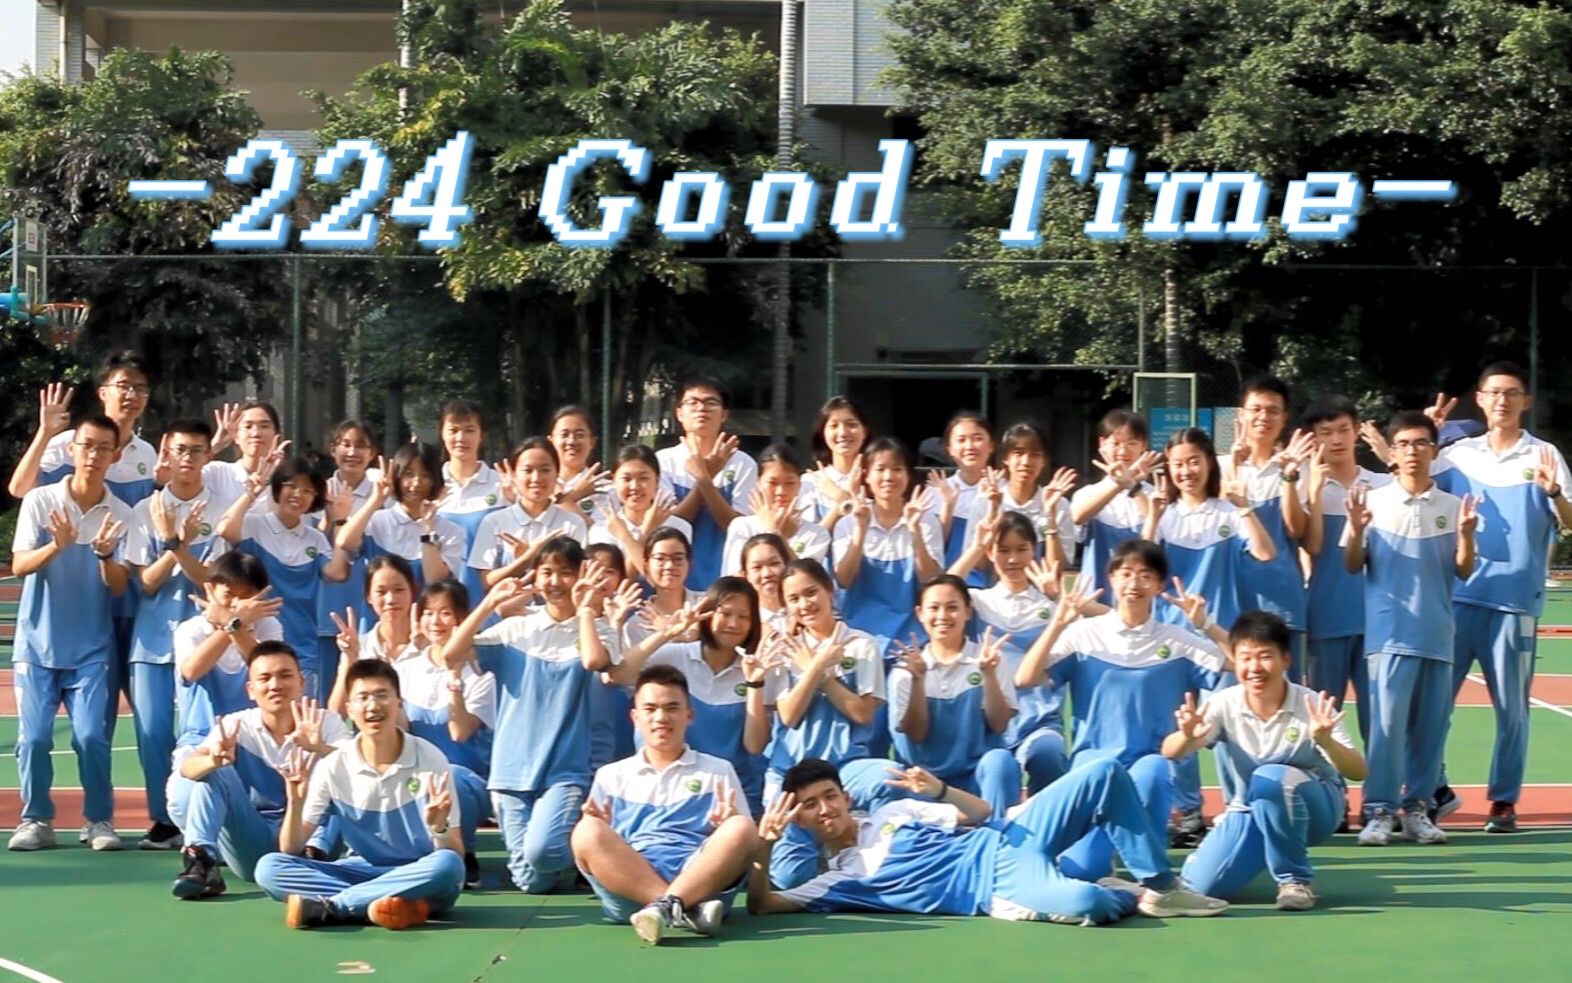 《Good time》佛山一中2019级224班 班级舞蹈